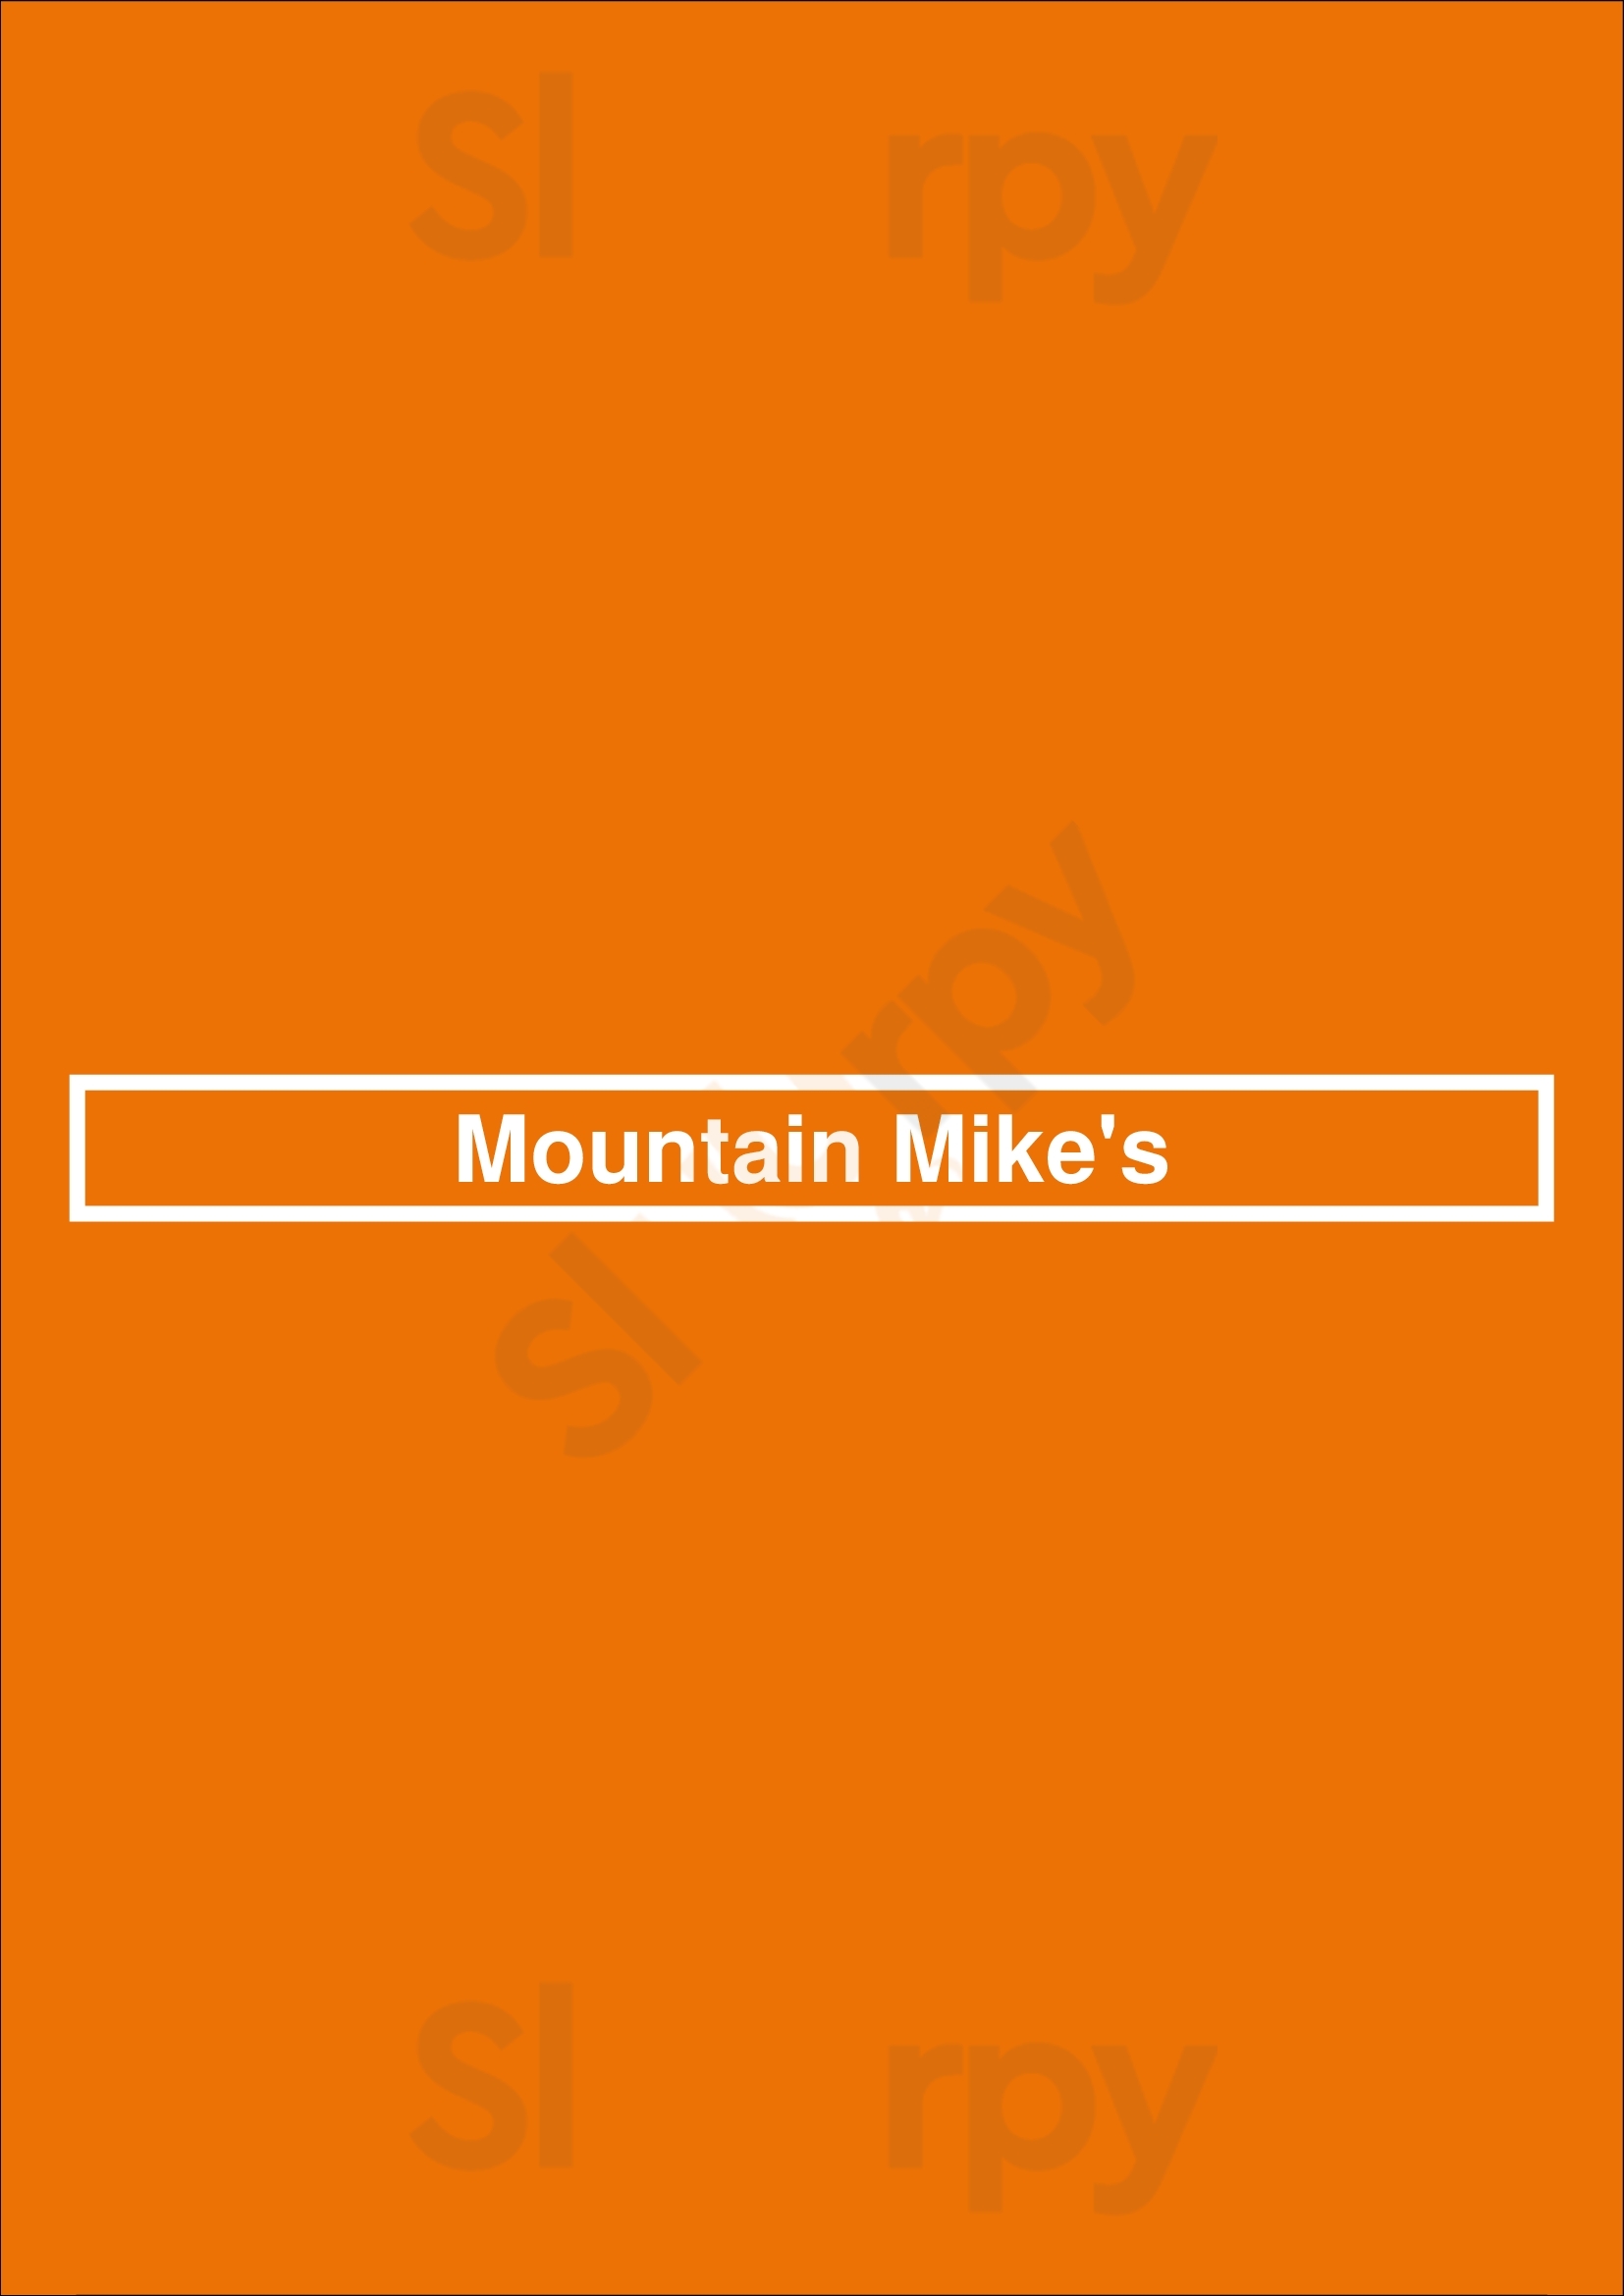 Mountain Mike's Newark Menu - 1